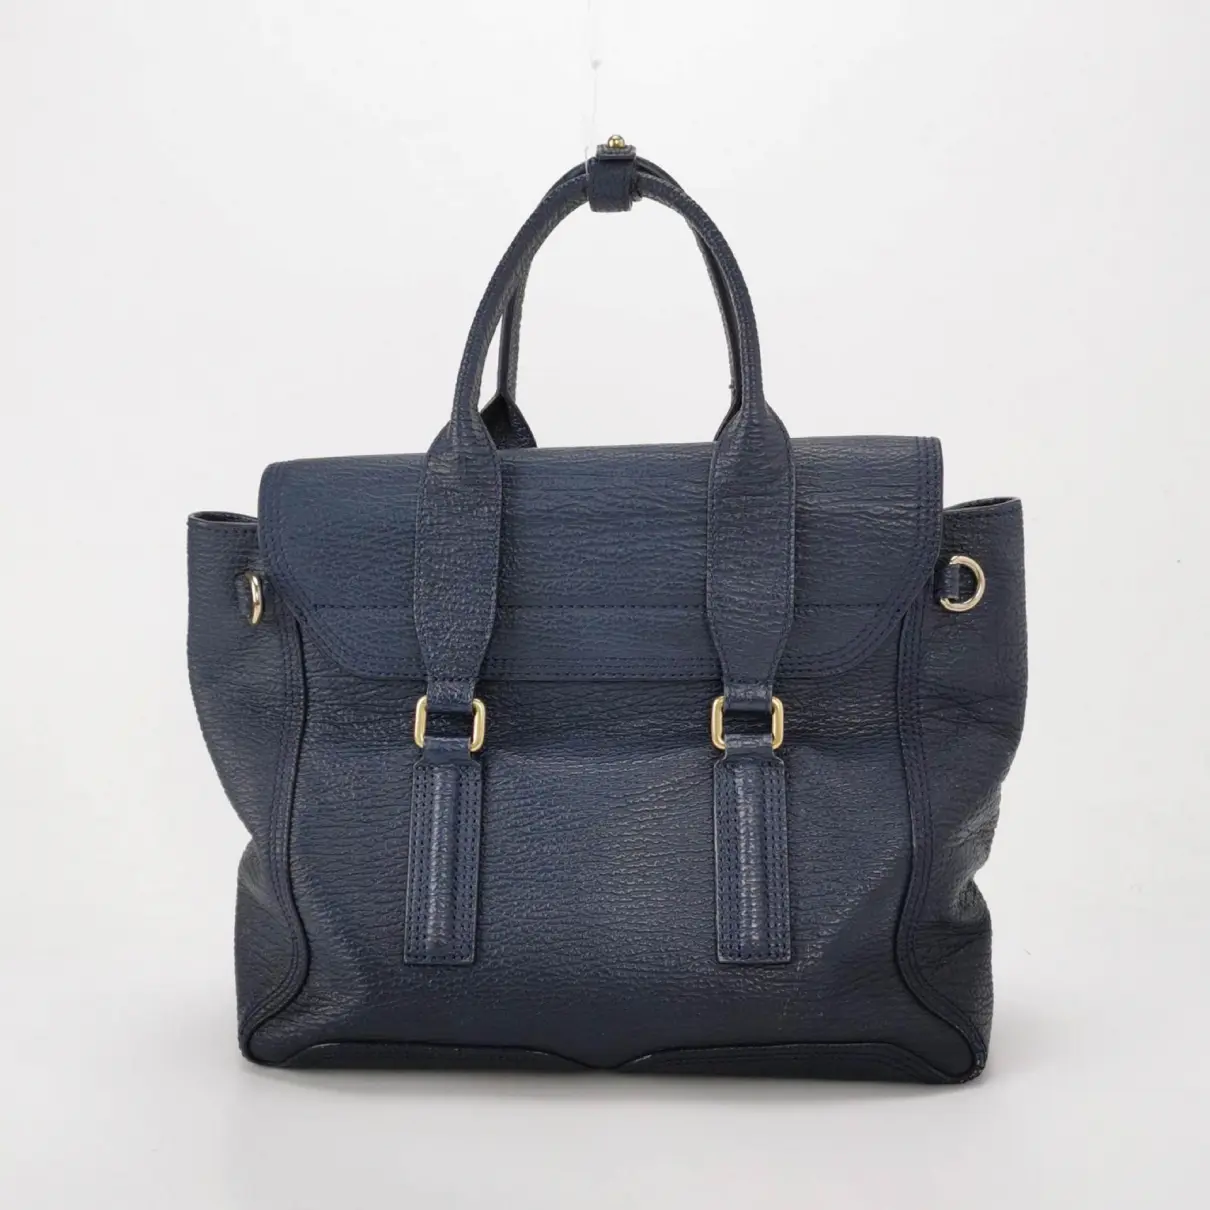 Buy 3.1 Phillip Lim Pashli leather handbag online